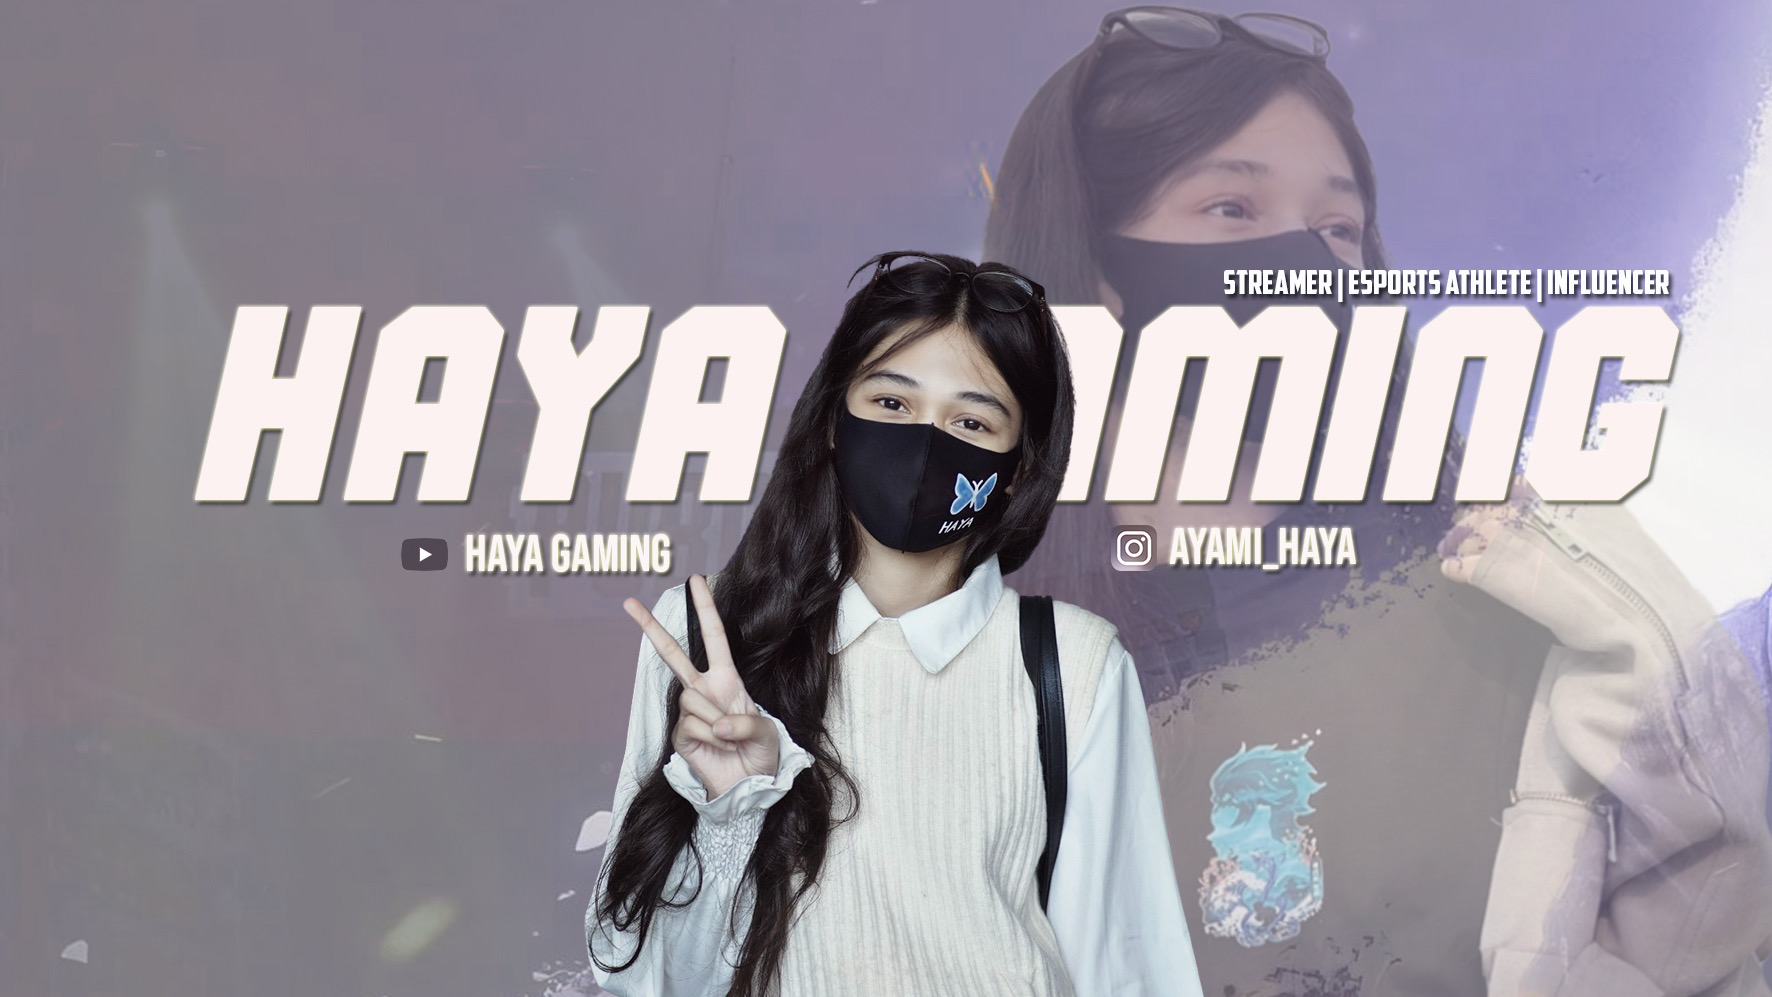 Ayami Haya's cover